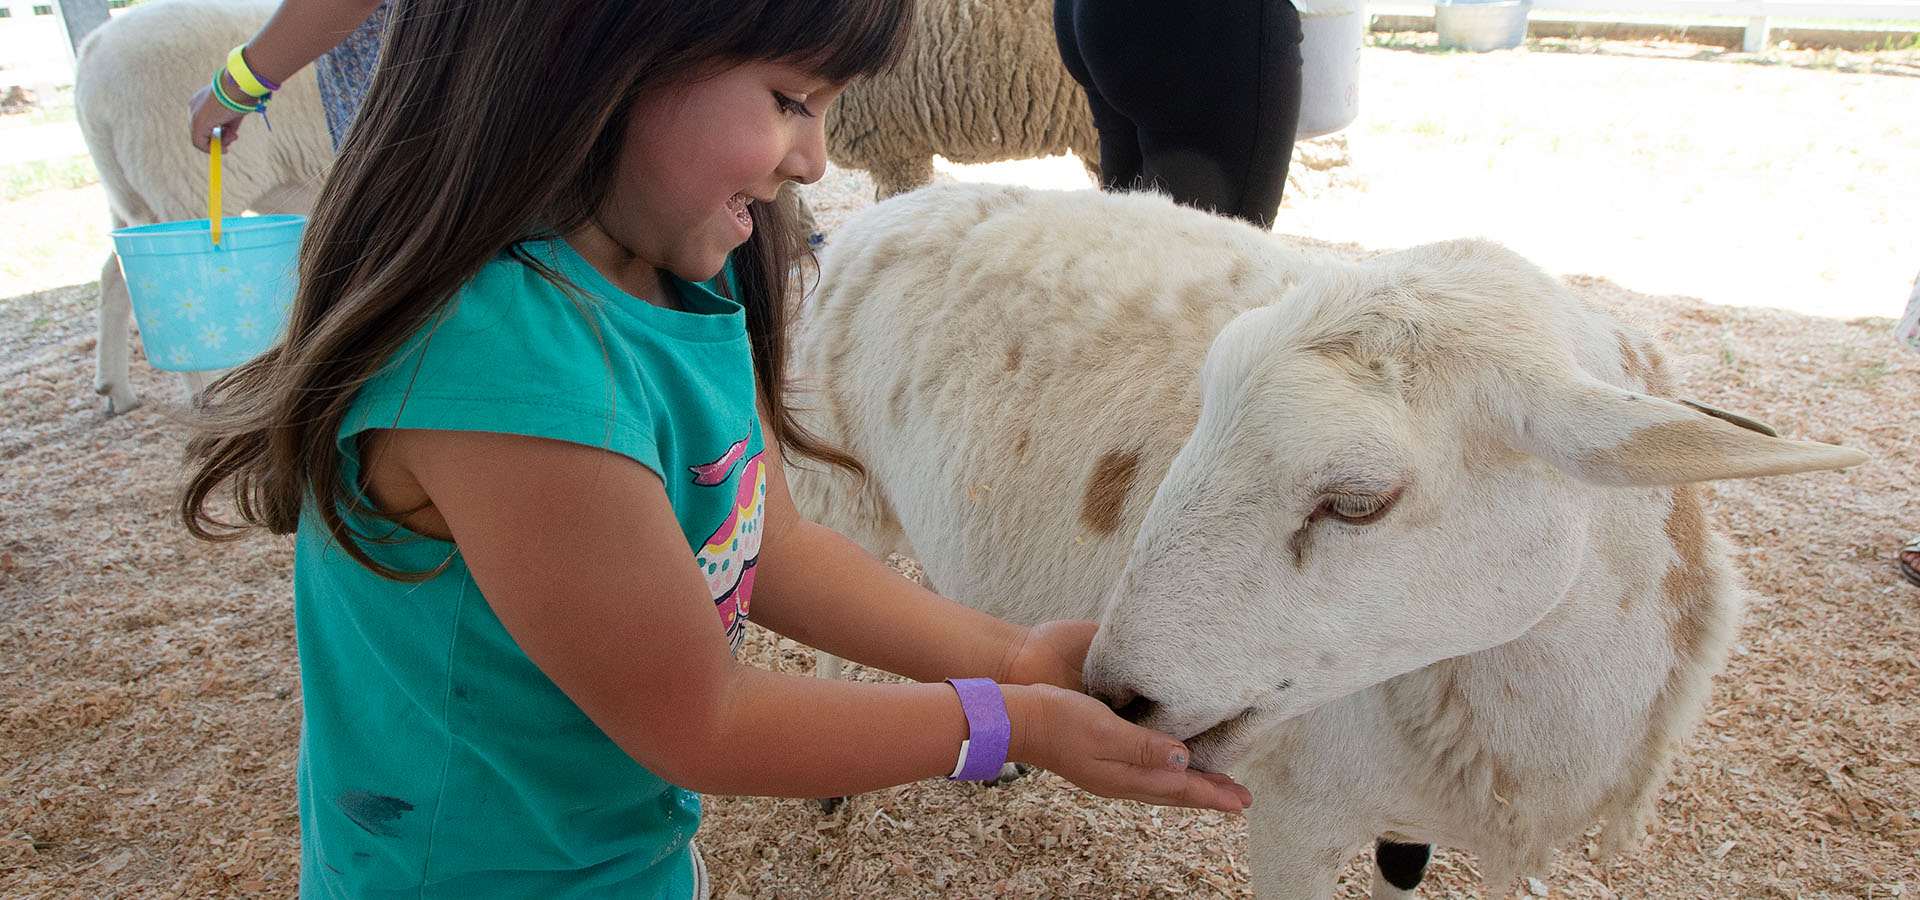 A girl pets a goat